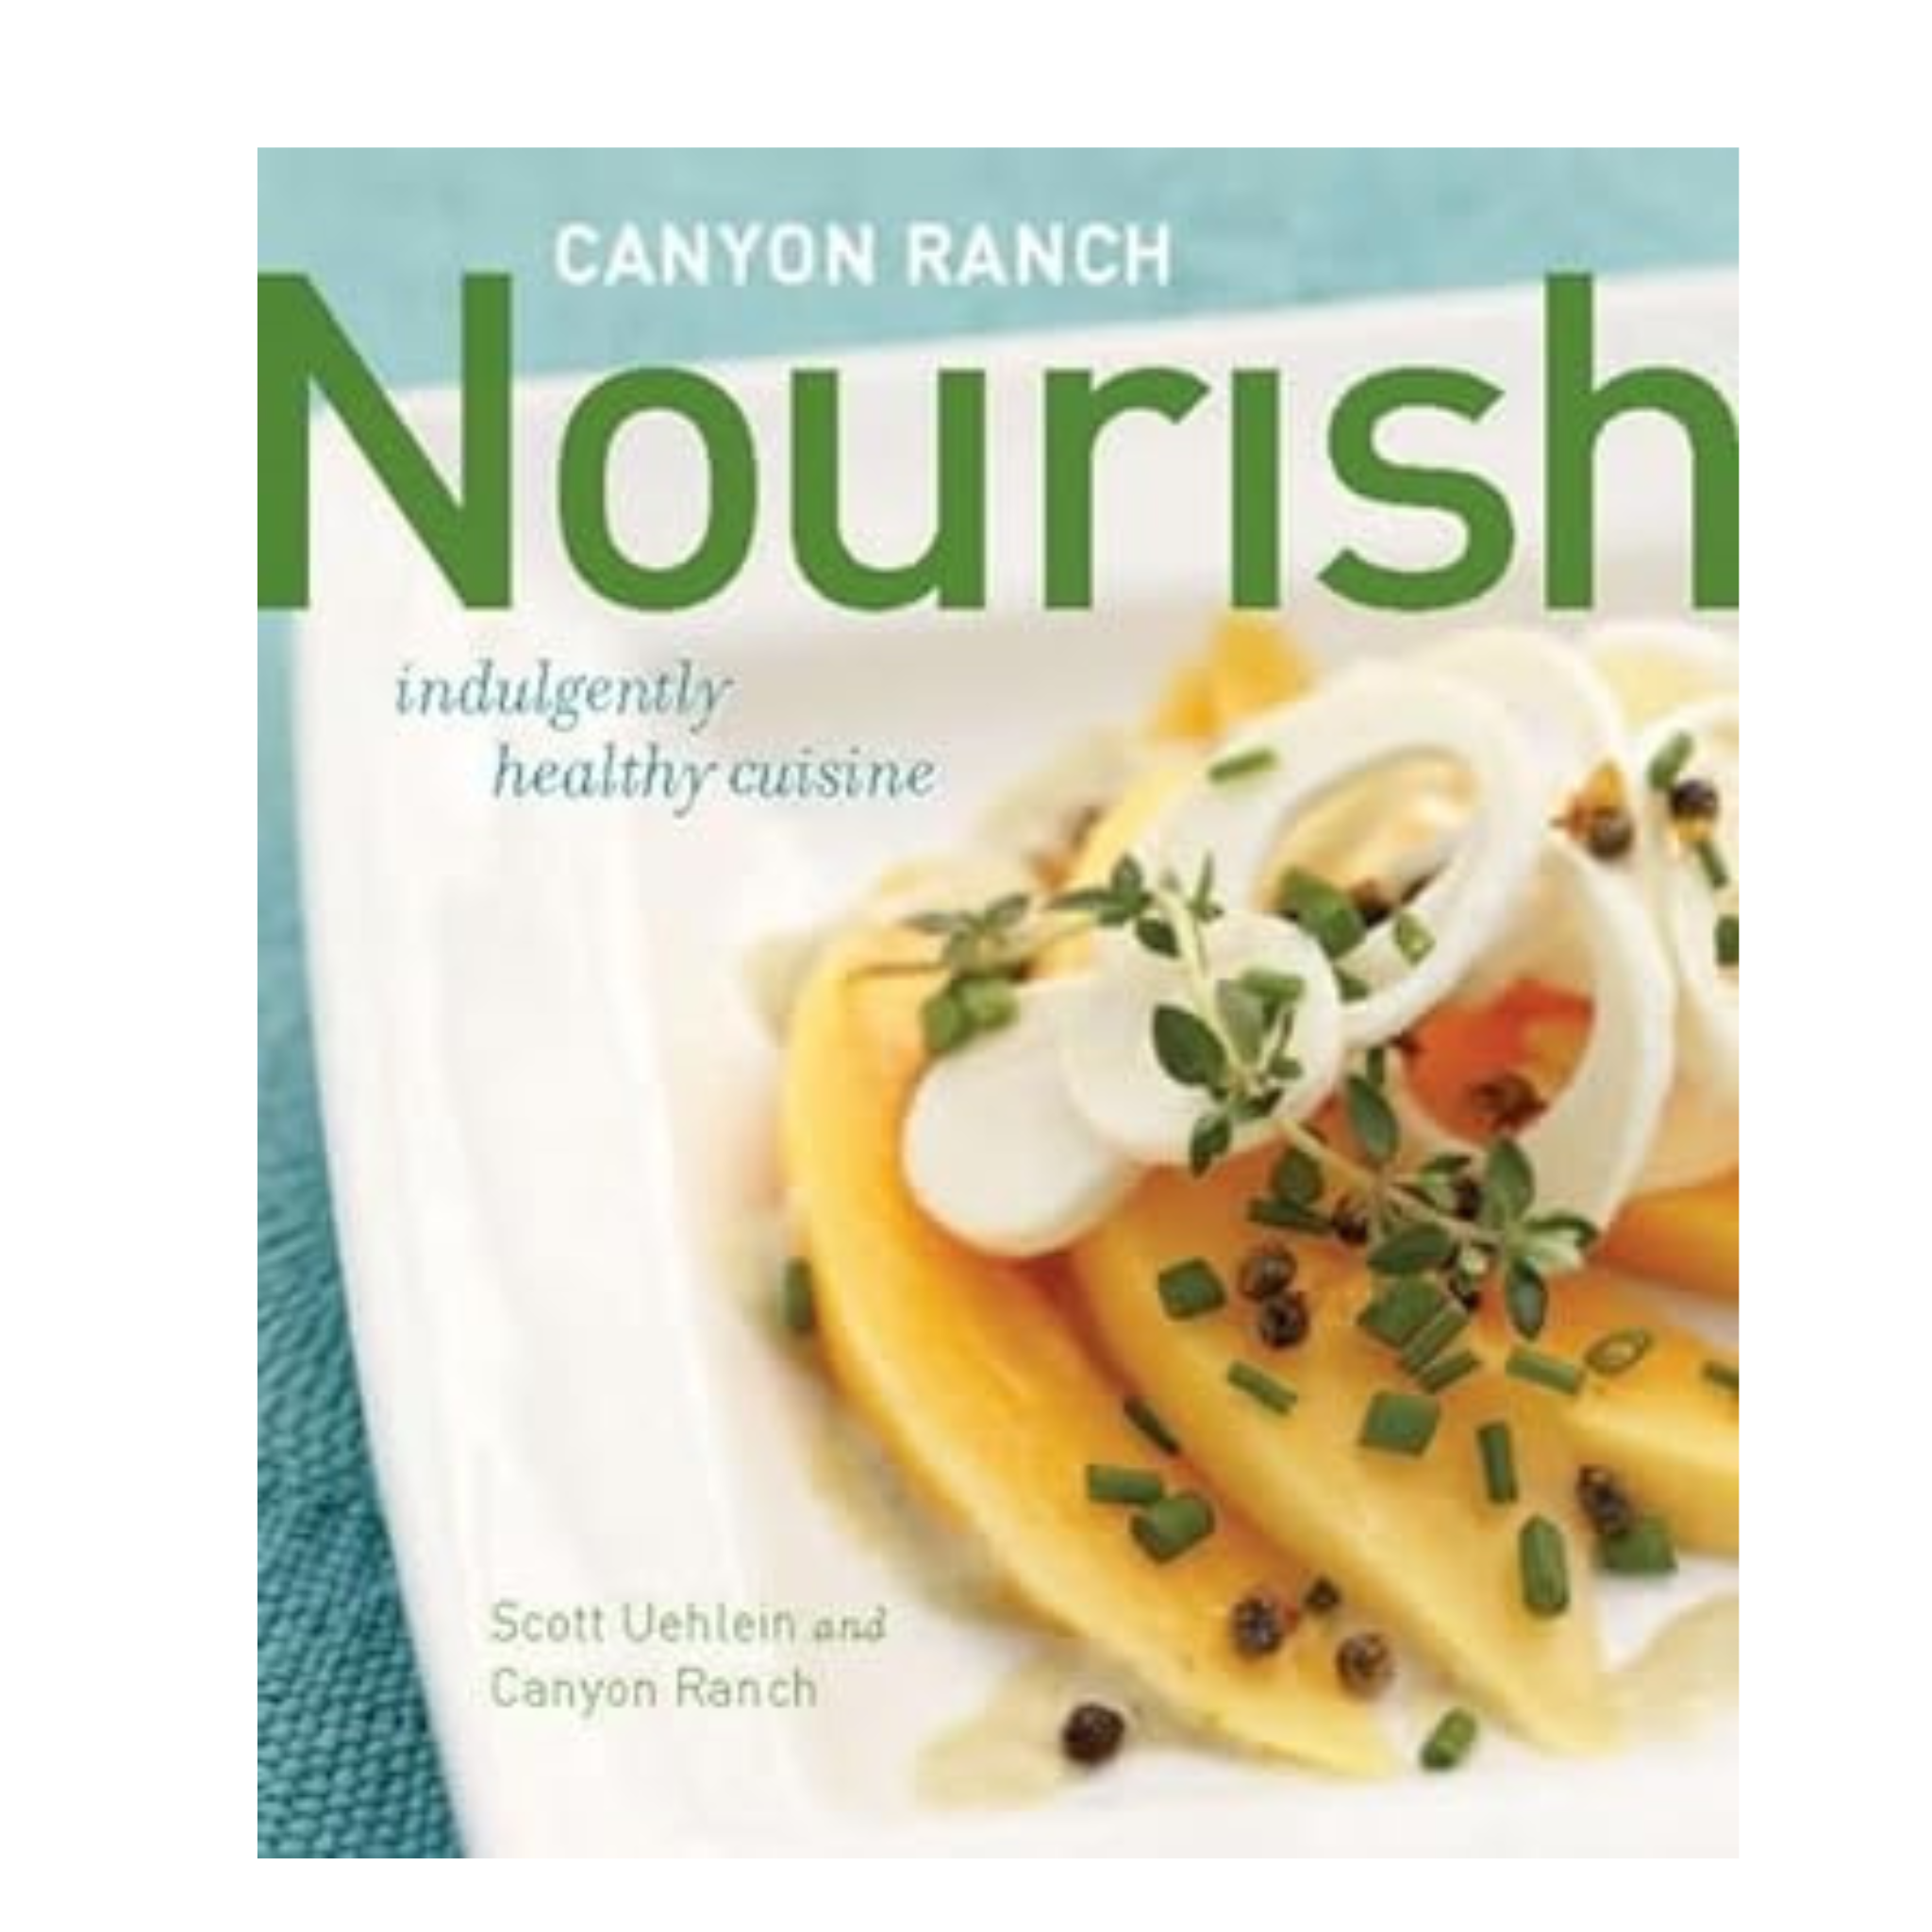 Canyon Ranch Nourish – Indulgently Healthy Cuisine